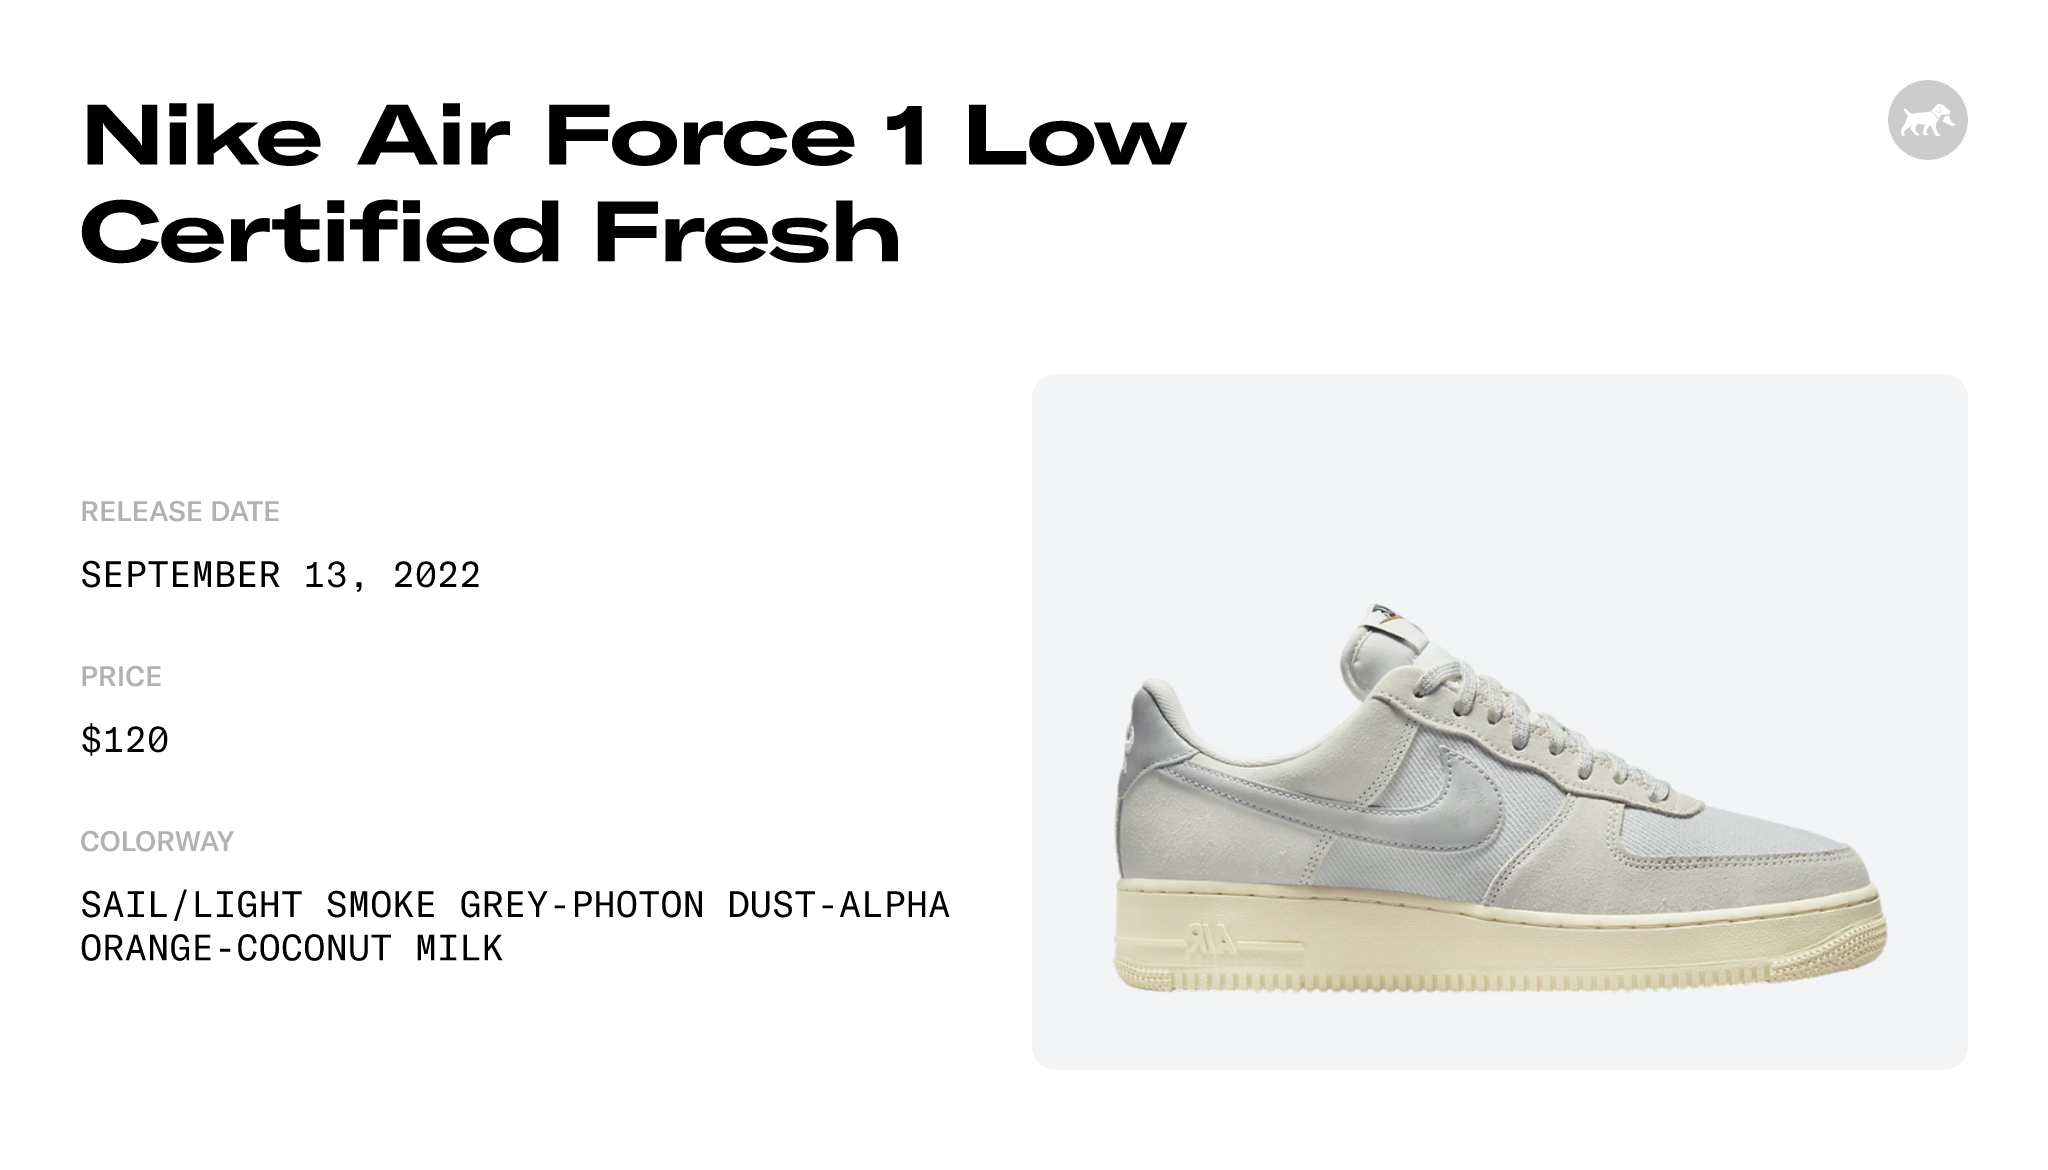 Nike Air Force 1 Low Certified Fresh Sail Light Smoke Grey Photon